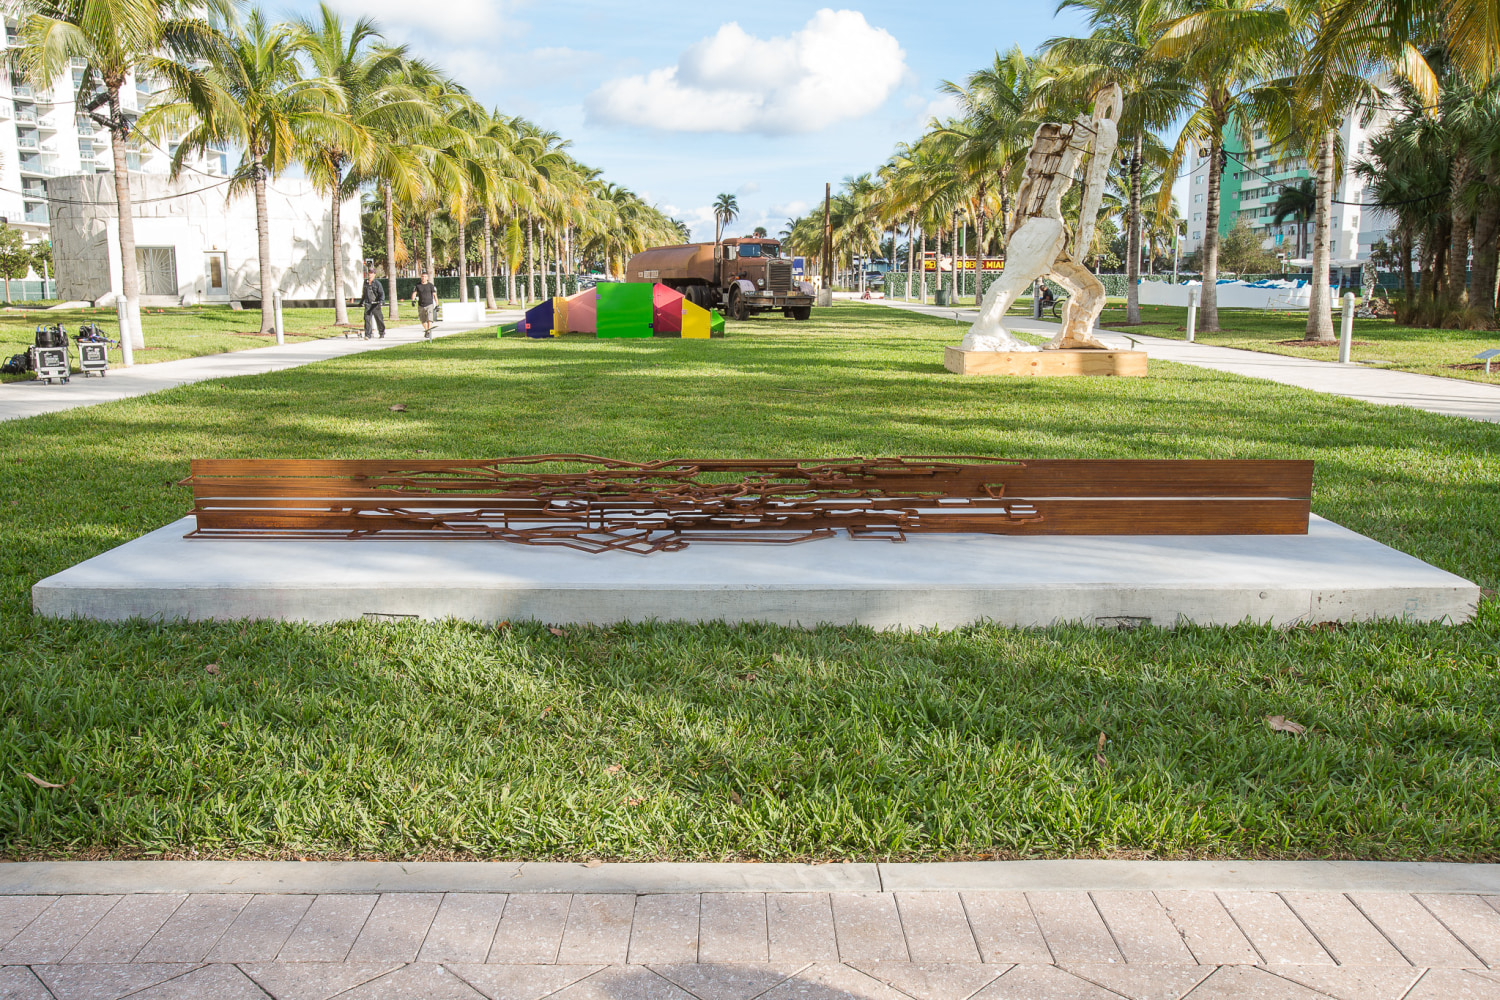 Alicja Kwade

Pulse of Time

2013

Steel

17 x 196 3/4 x 36 2/3 inches (43.2 x 499.7 x 93.1 cm)

AKW 131

Art Basel Miami Beach, Public Sector, 2013

&amp;nbsp;